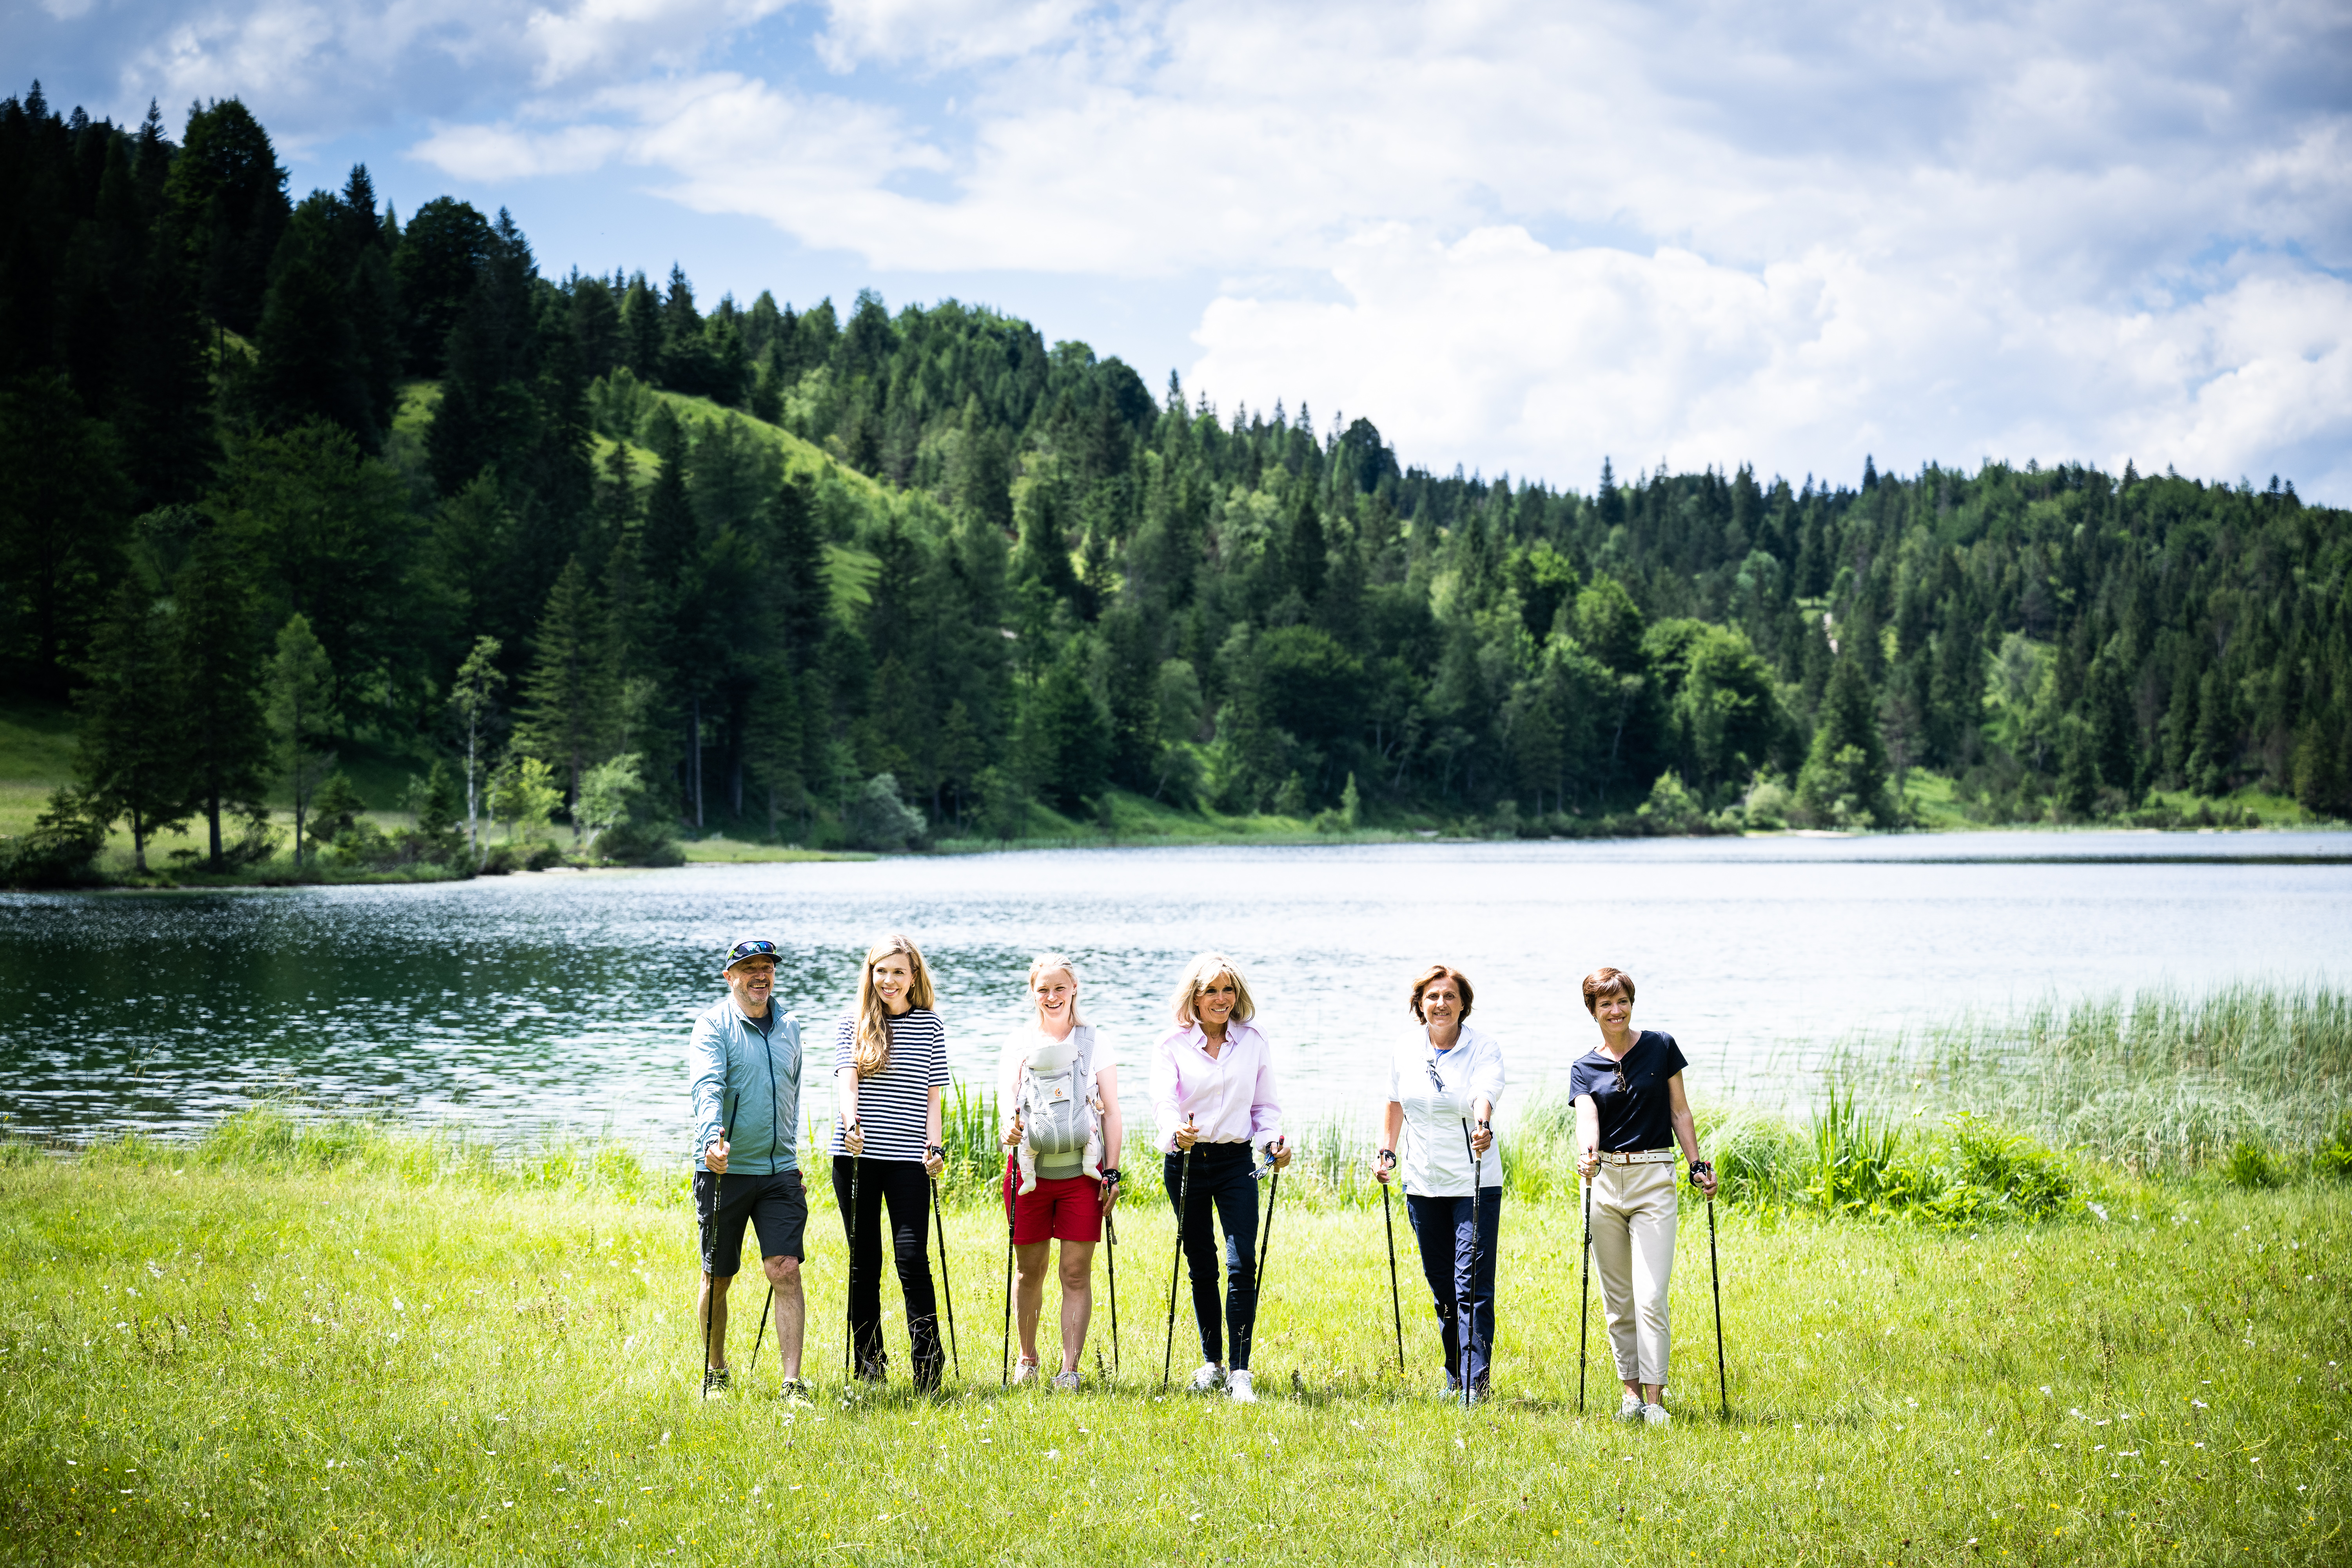 Group photo – Christian Neureuther, Carrie Johnson, Miriam Neureuther, Brigitte Macron, Britta Ernst and Amélie Derbaudrenghien pose beside the Ferchensee.